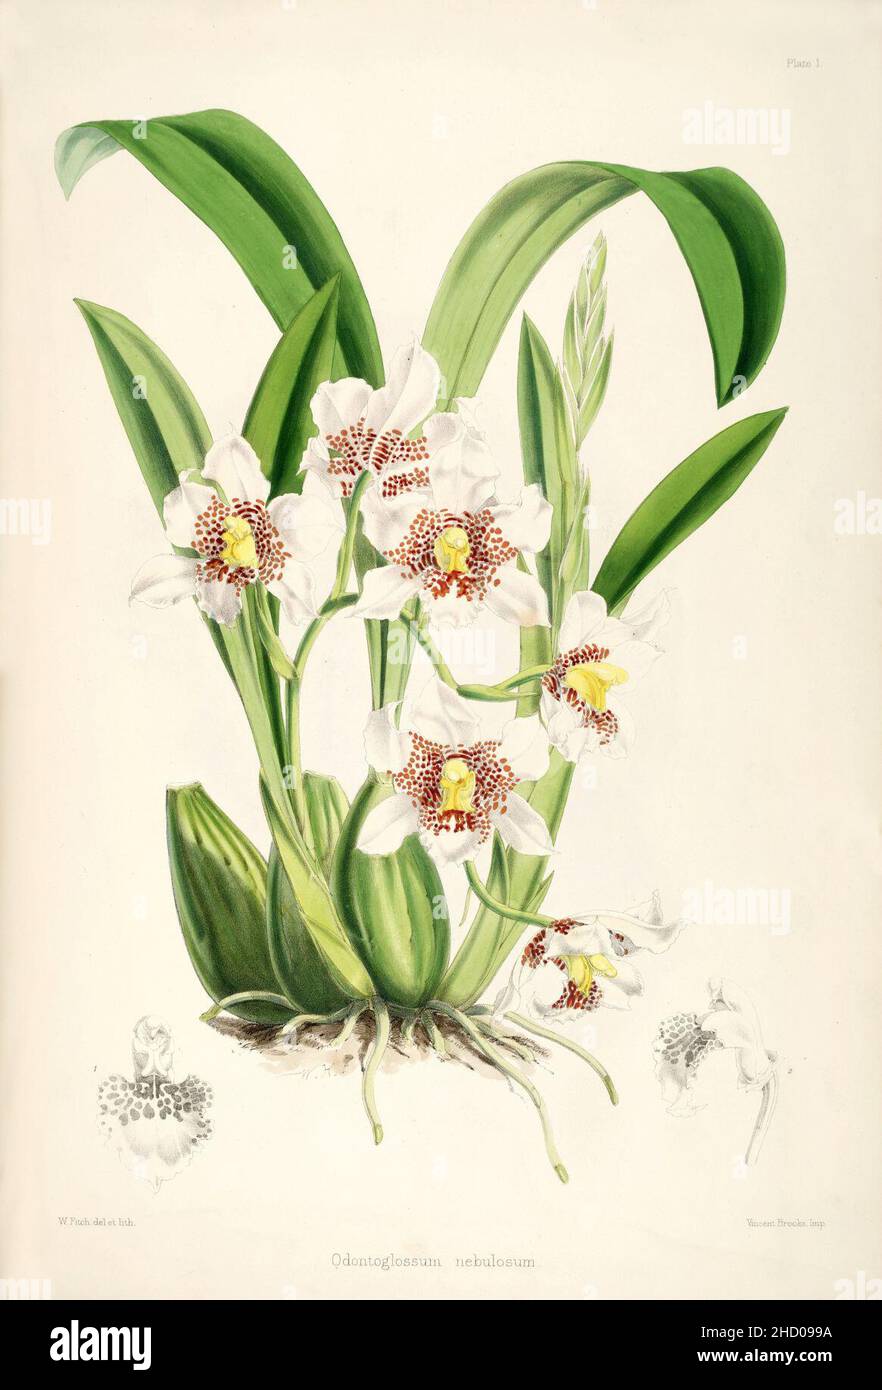 Rhynchostele aptera (as Odontoglossum nebulosum) - pl. 1 - Bateman - A Monograph of Odontoglossum. Stock Photo